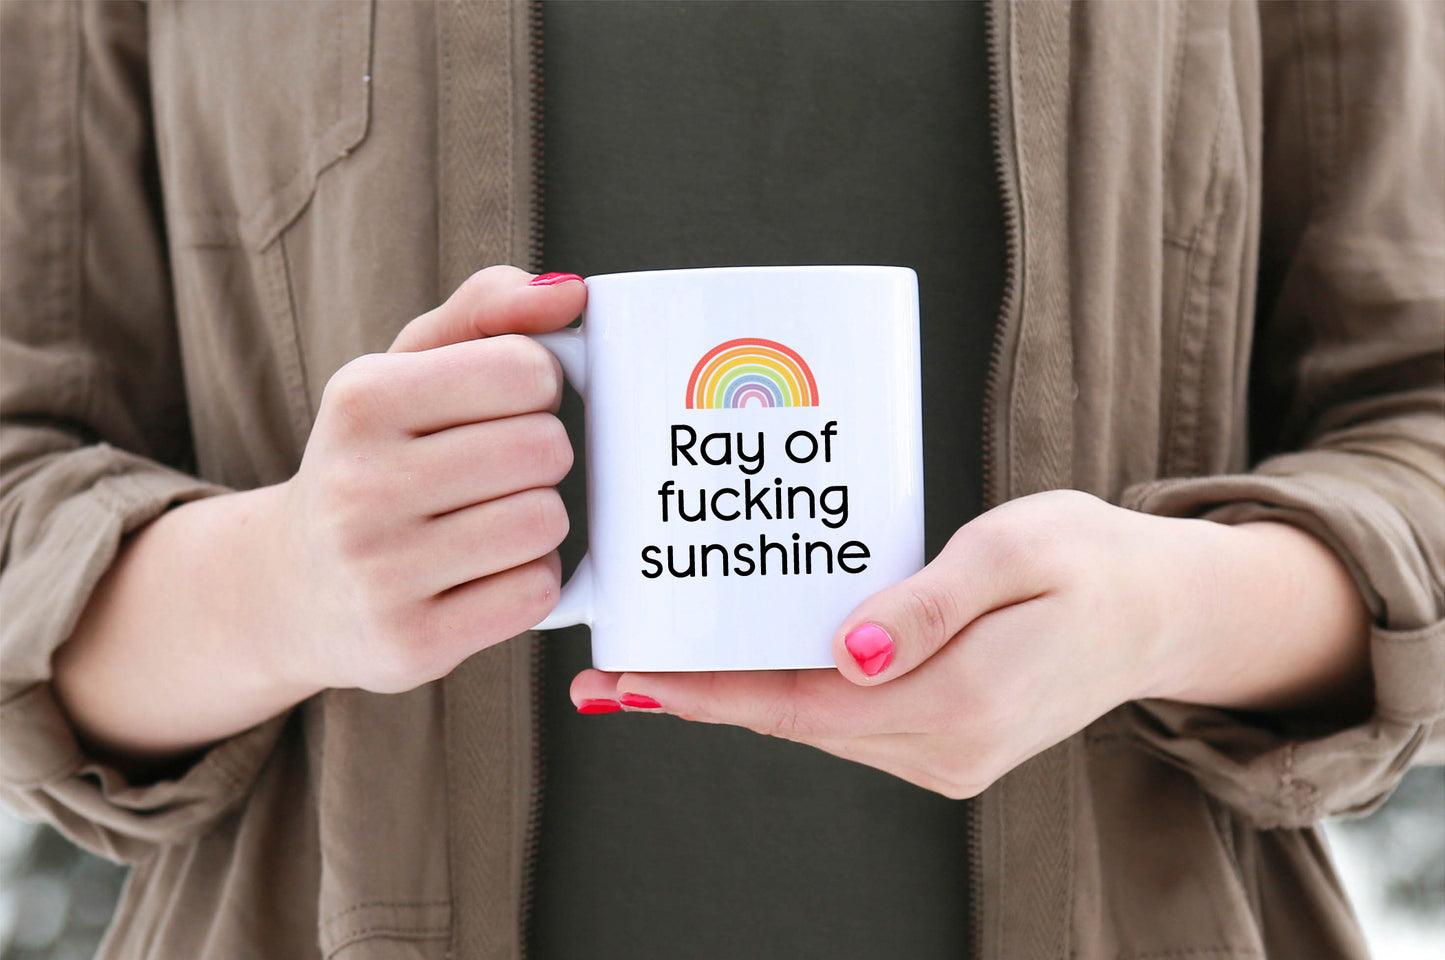 Ray of Sunshine Ceramic Mug